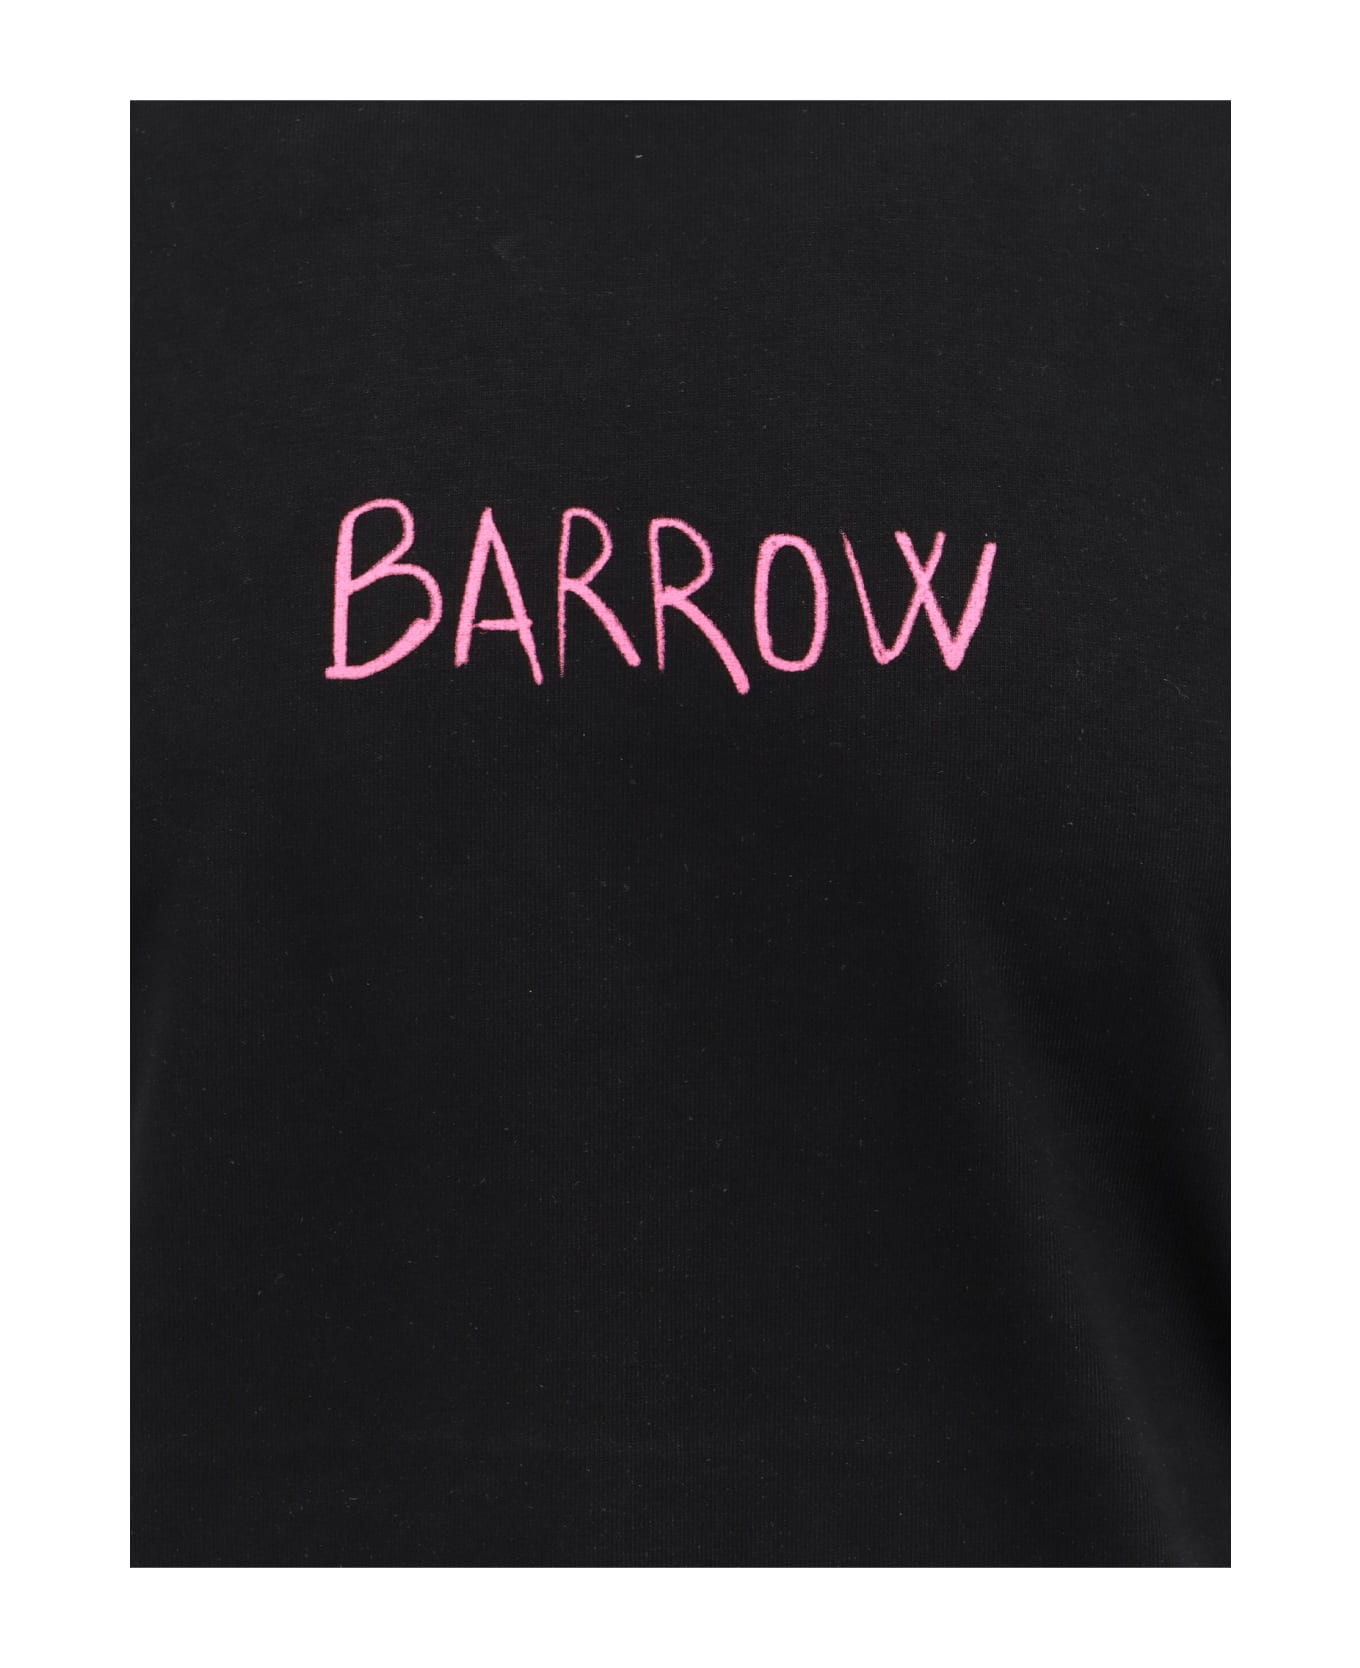 Barrow T-shirt - Nero/Black